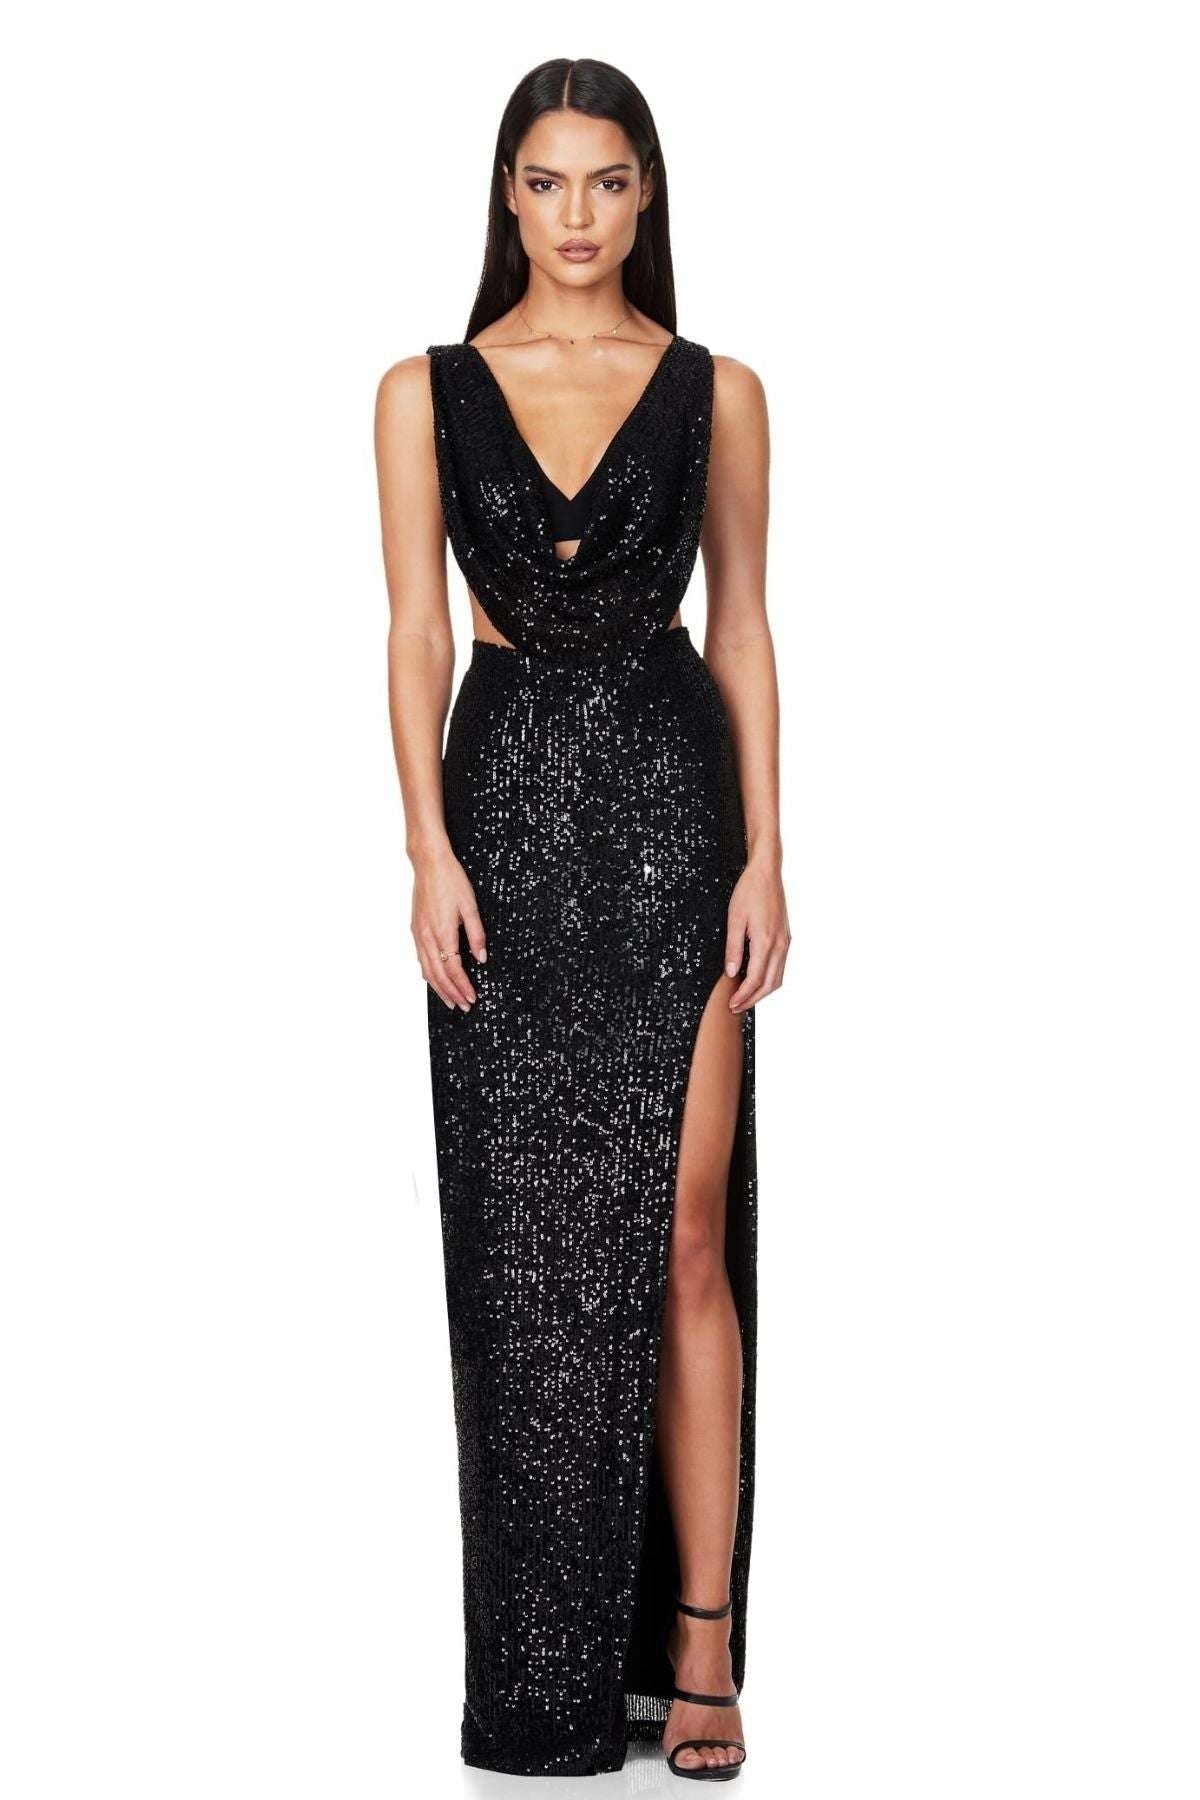 Rent NOOKIE Pandora Crop Set (Black) - Hire this dress! | Dress for a Night